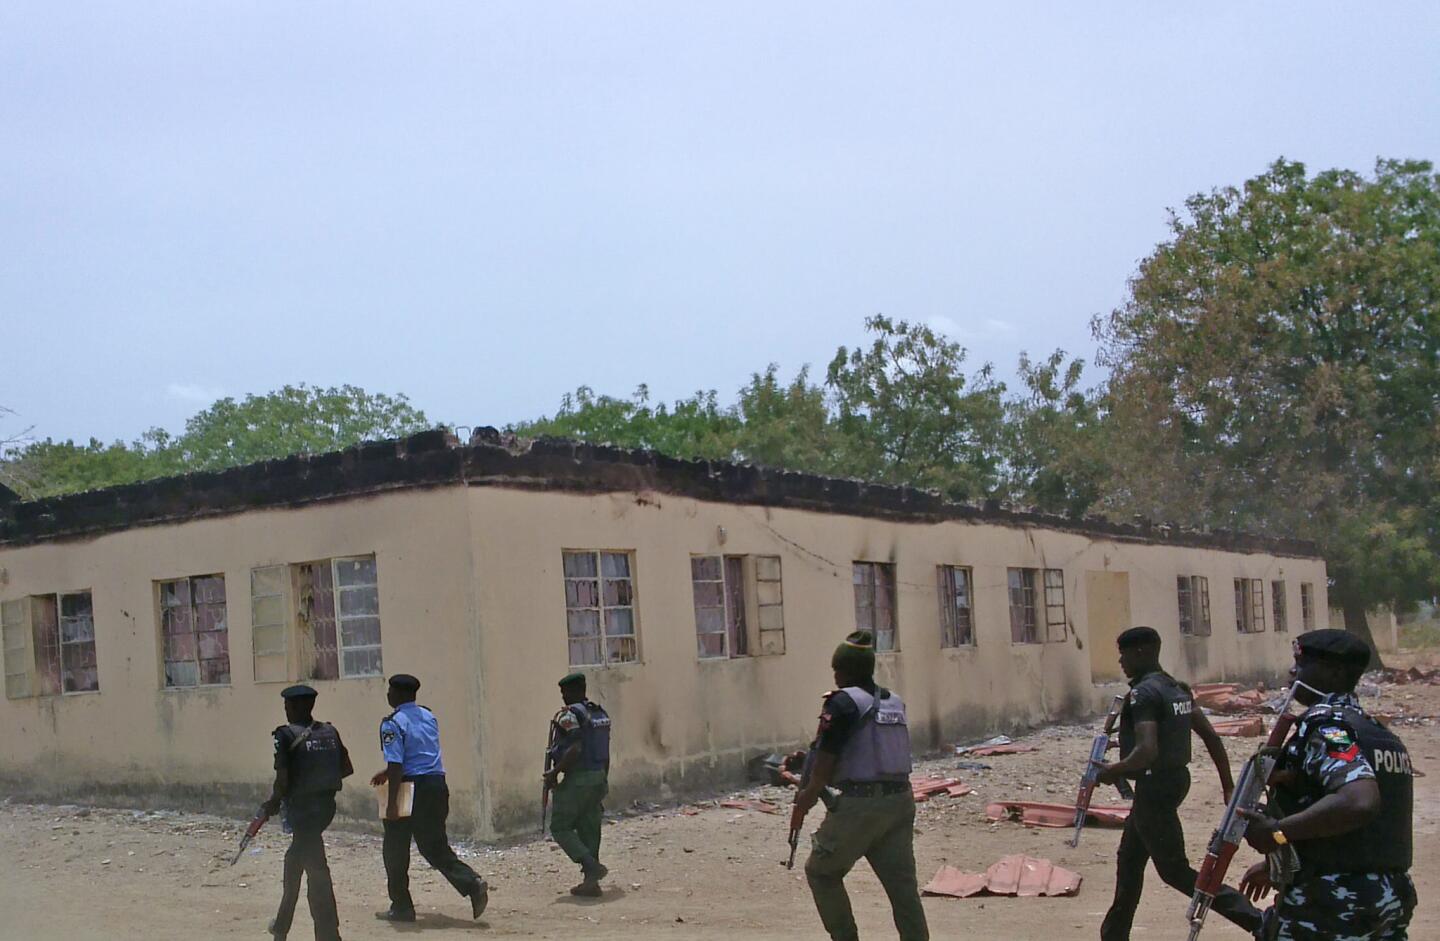 The school in Chibok